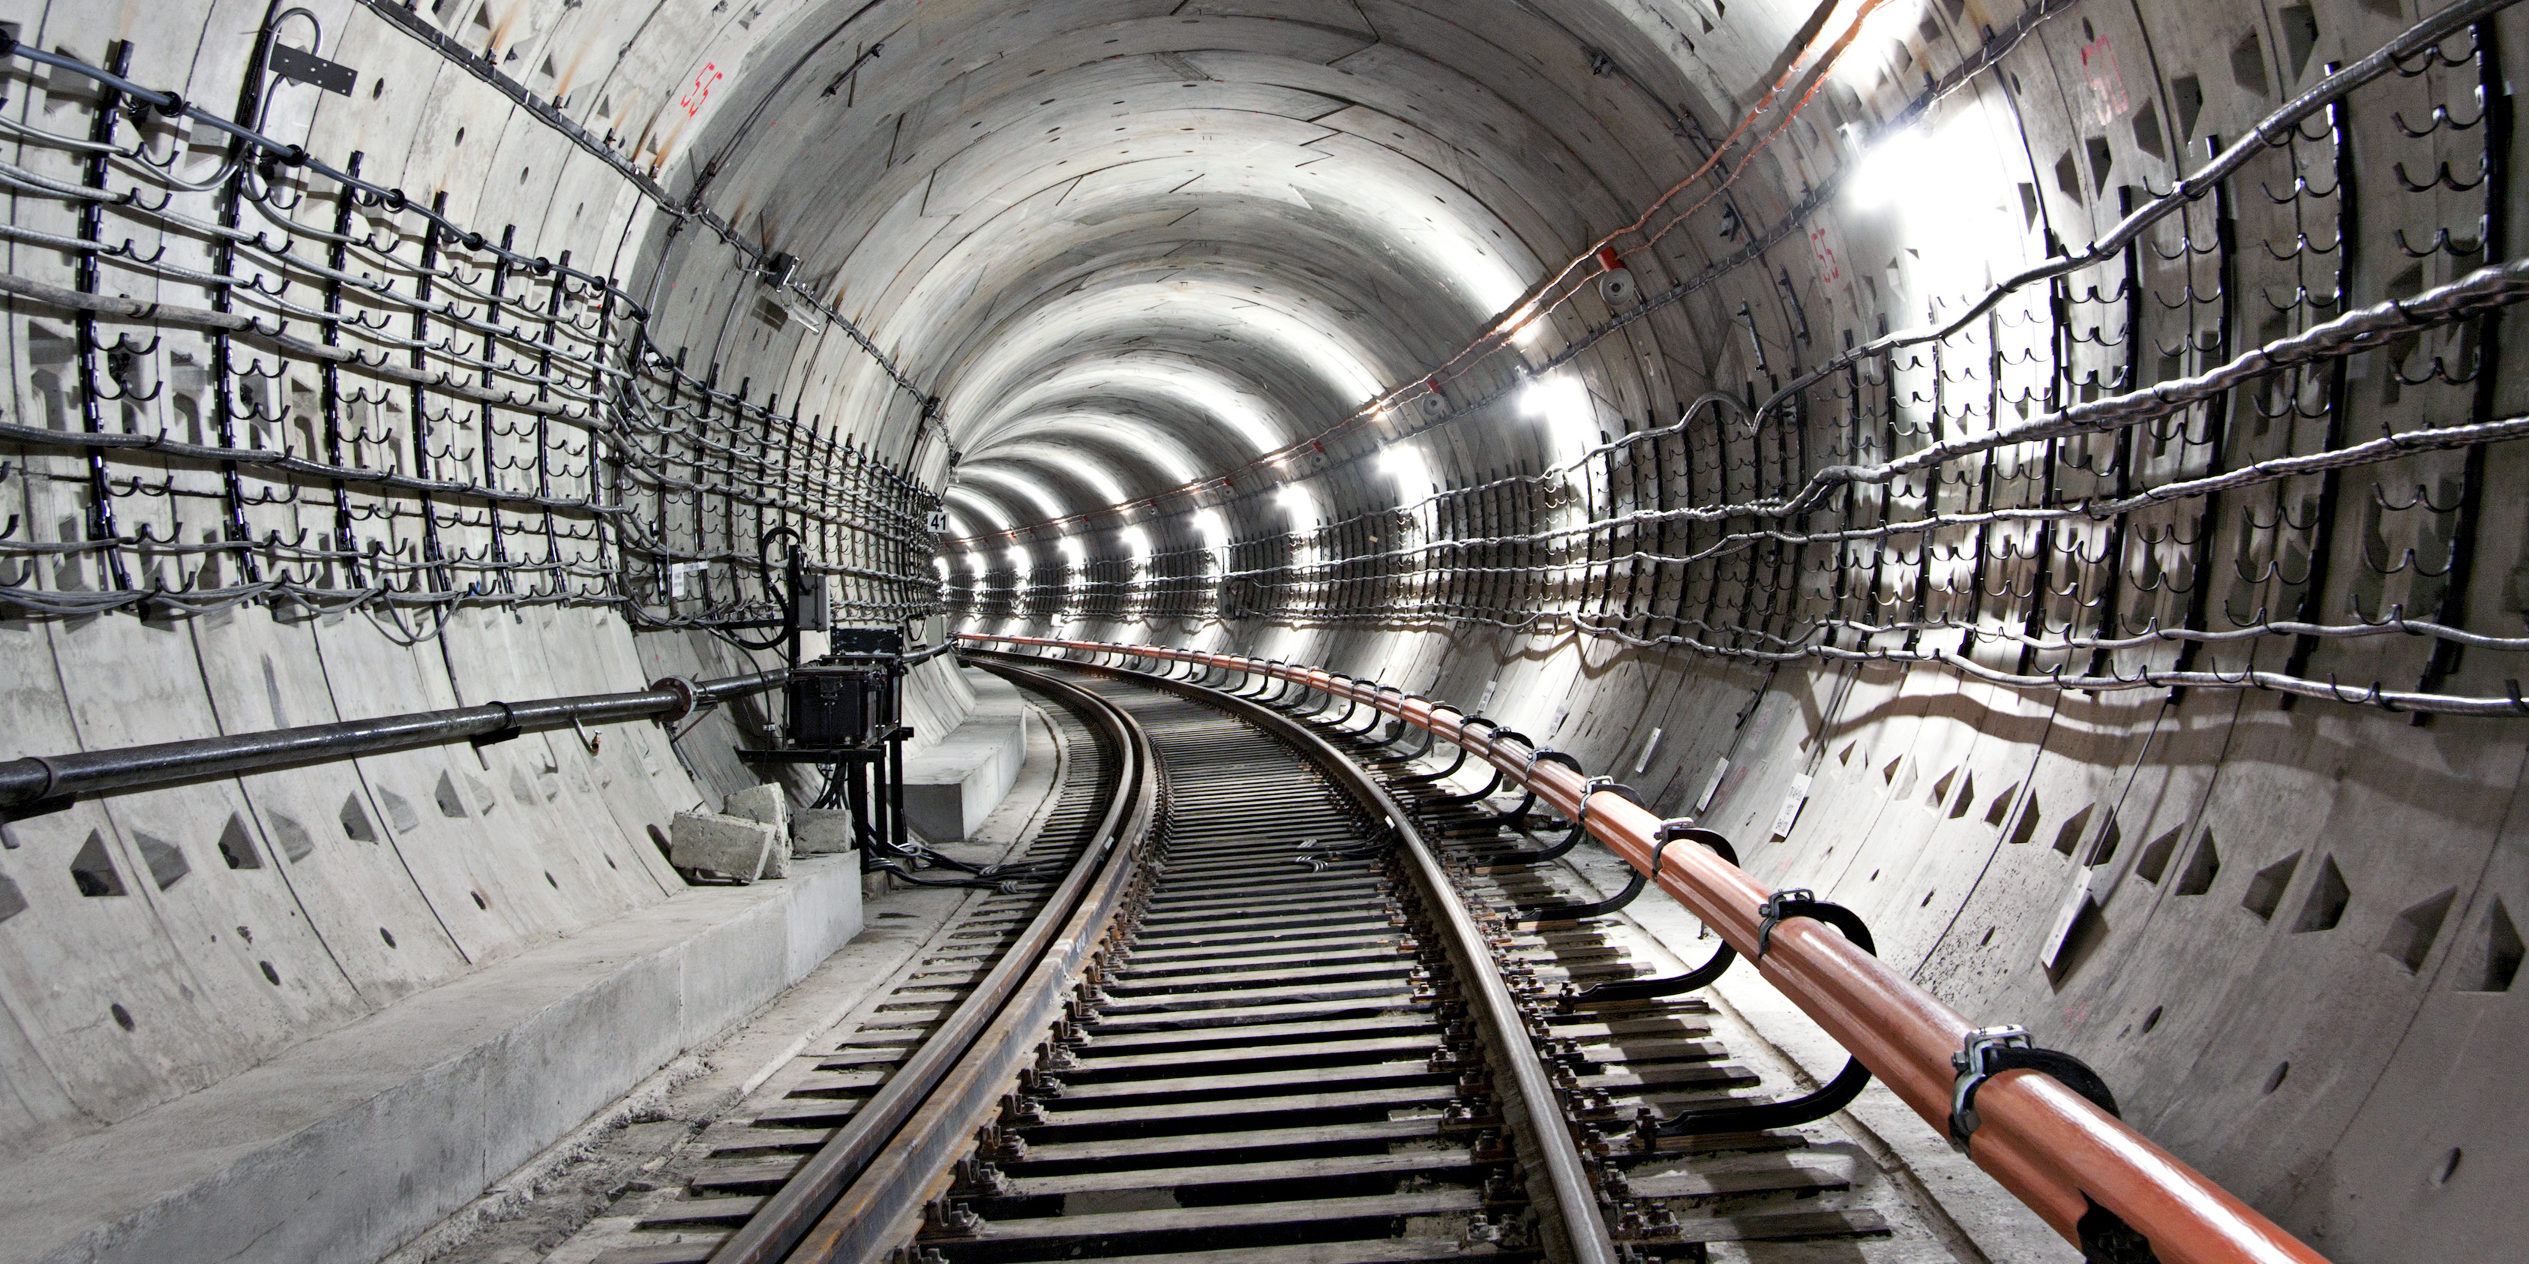 https://www.ingenieur.de/wp-content/uploads/2020/02/Eisenbahn-Tunnel-panthermedia_B89381590-e1580725261239.jpg